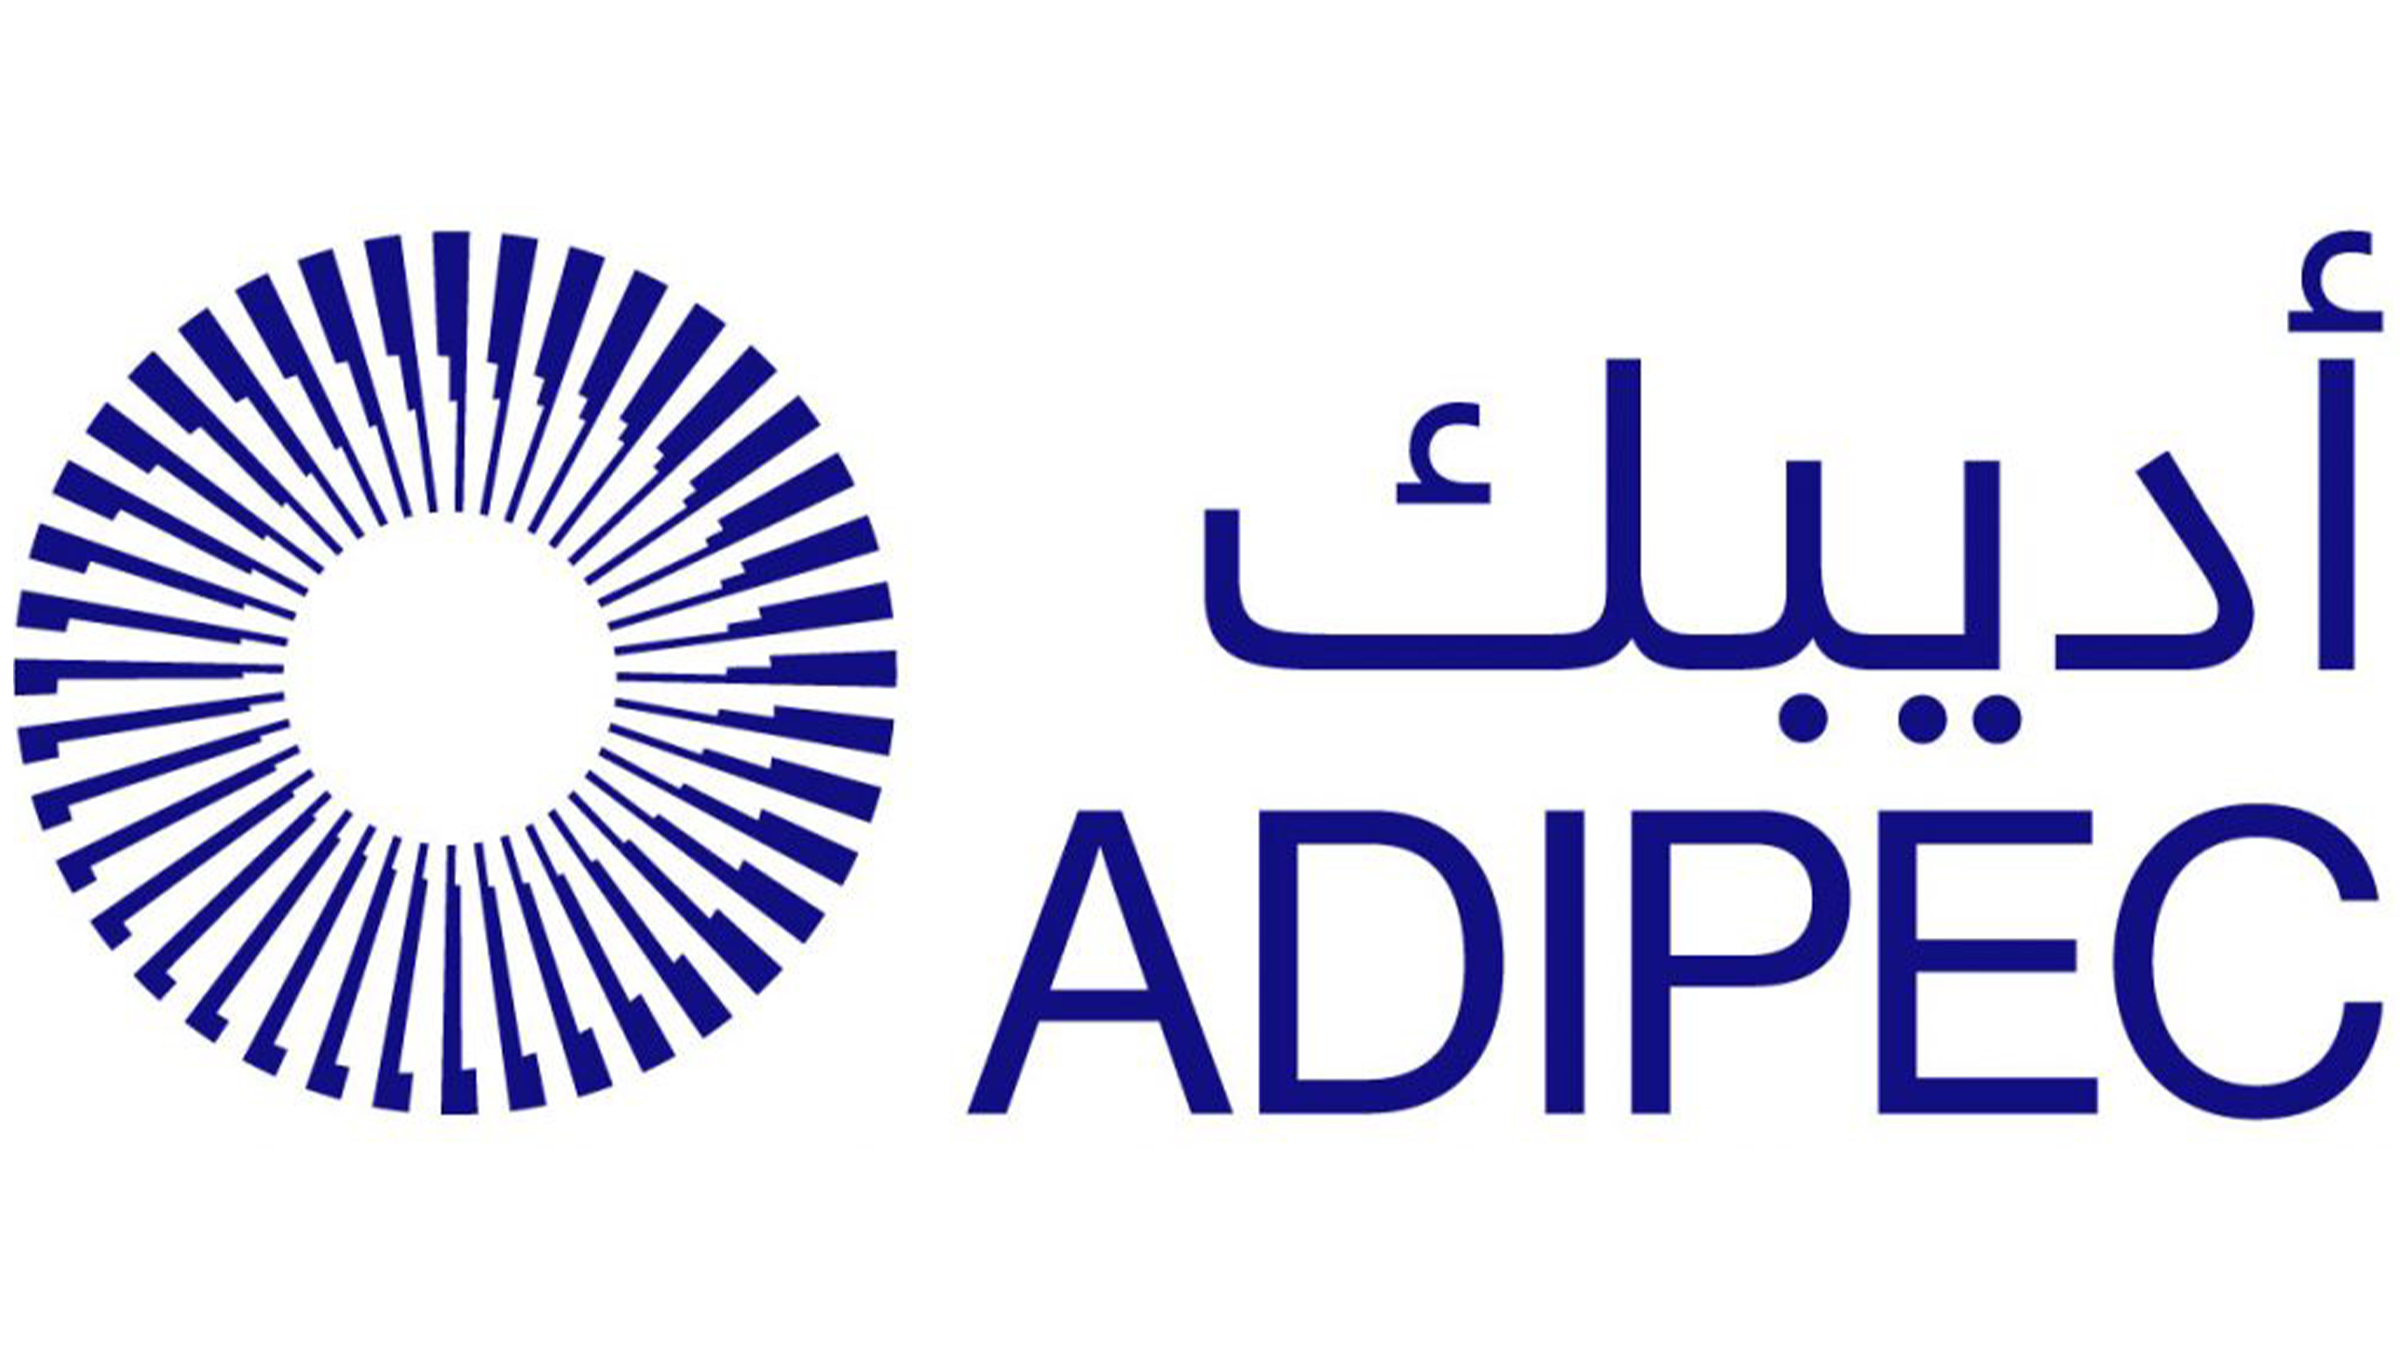 ADIPEC 2022 Logo